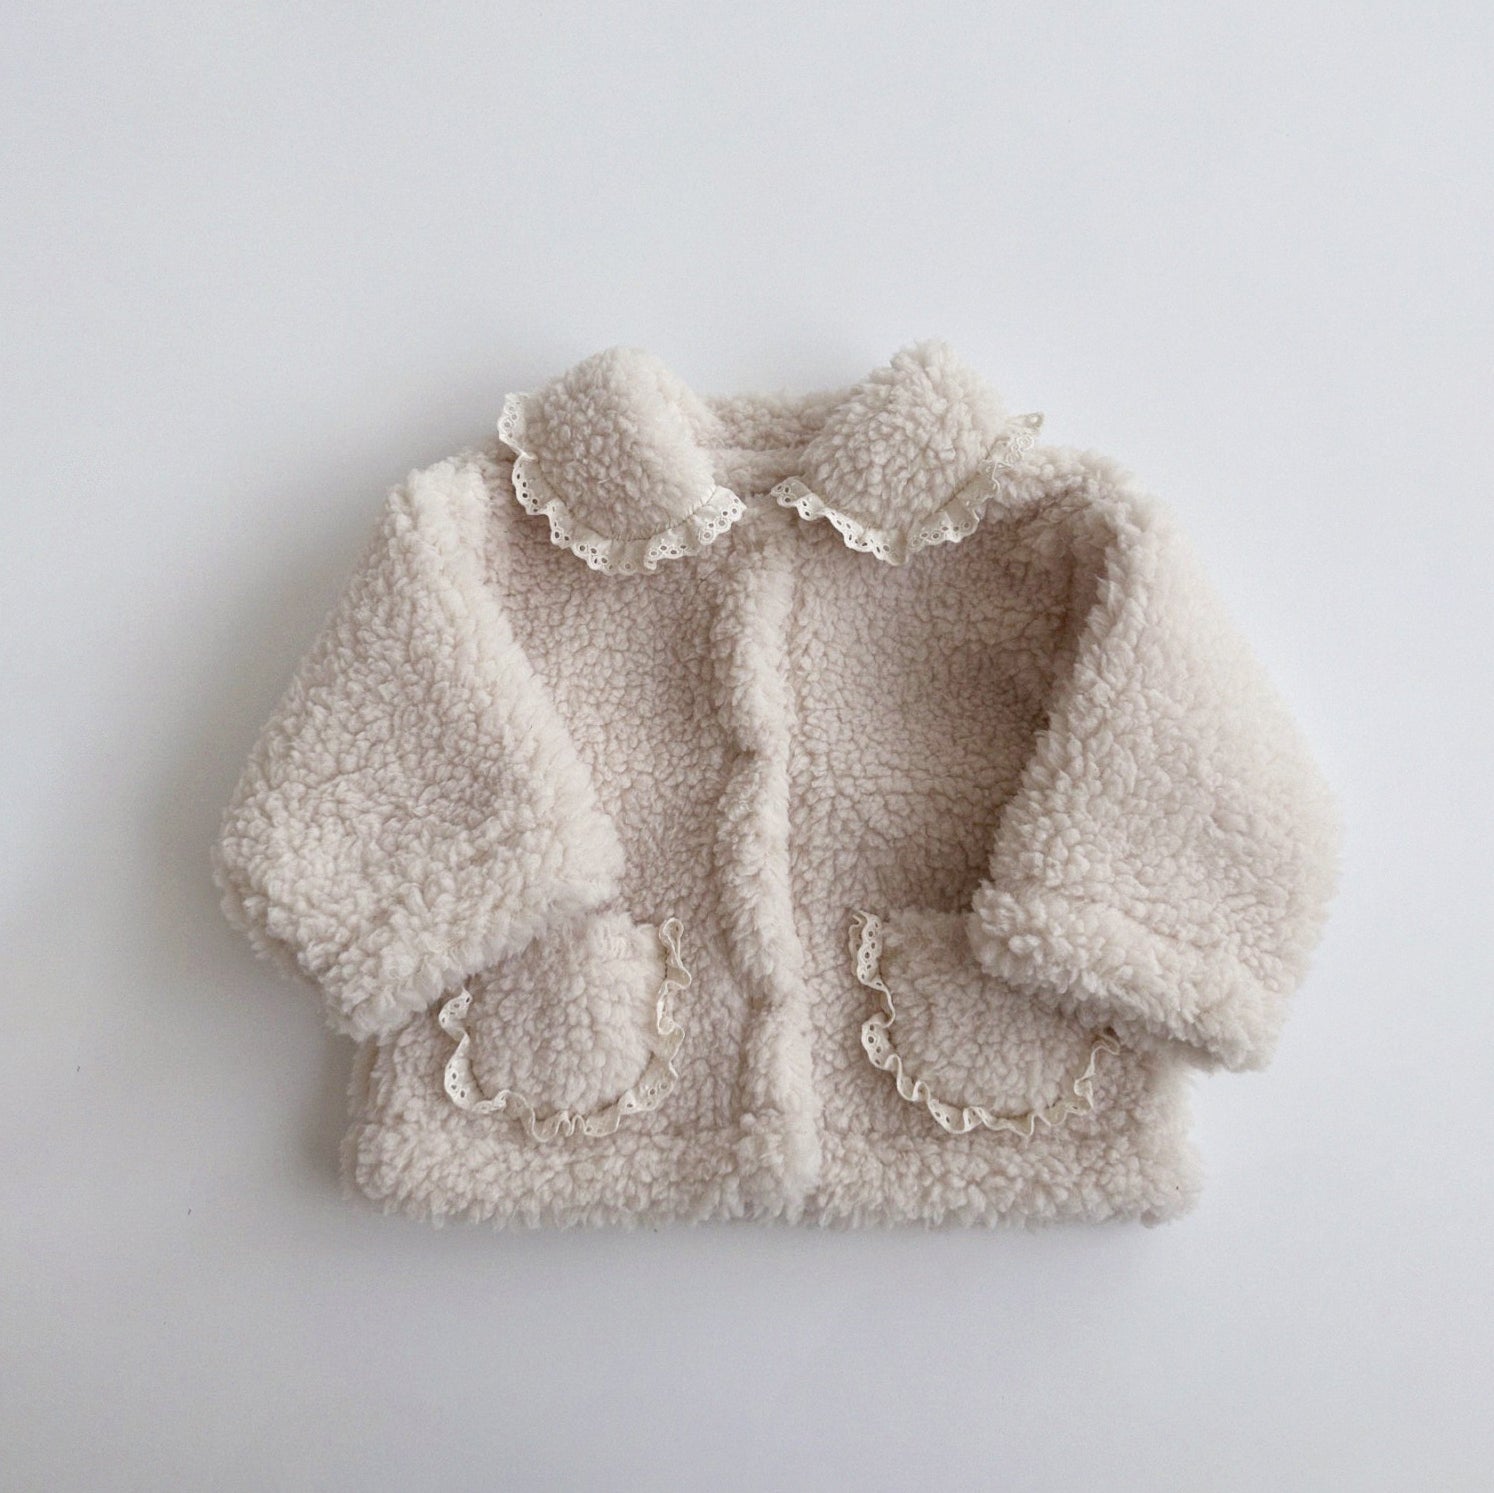 Toddler Aosta Lace Pocket Jacket (3m-5y) - Ivory